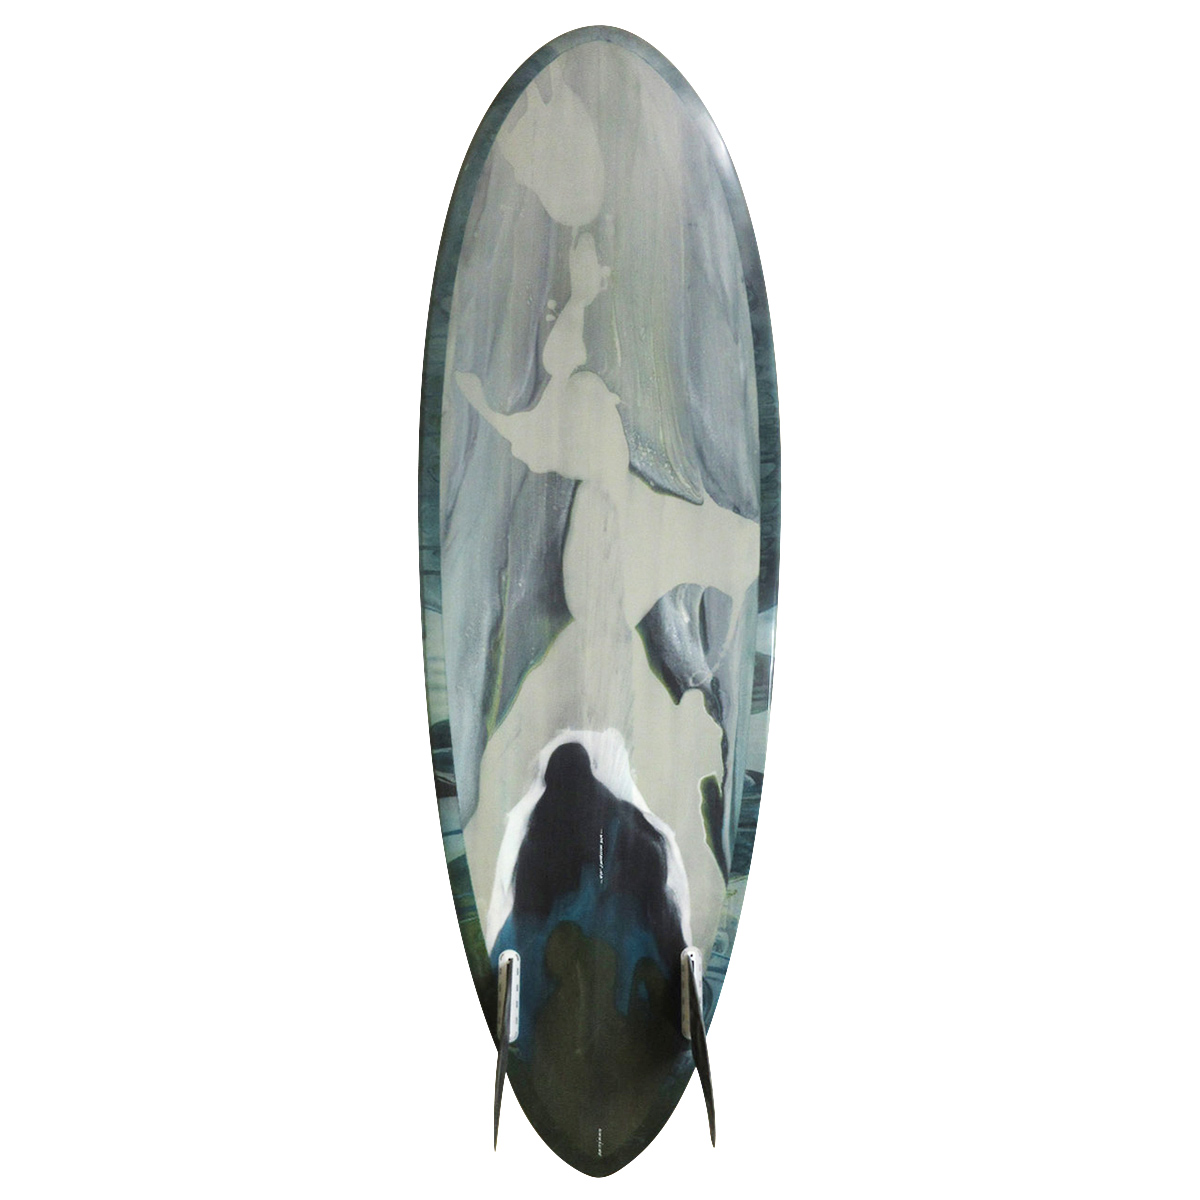 Mccallum Surfboards / Twin Keel Egg 5`10 Shaped By Jeff Mccallum